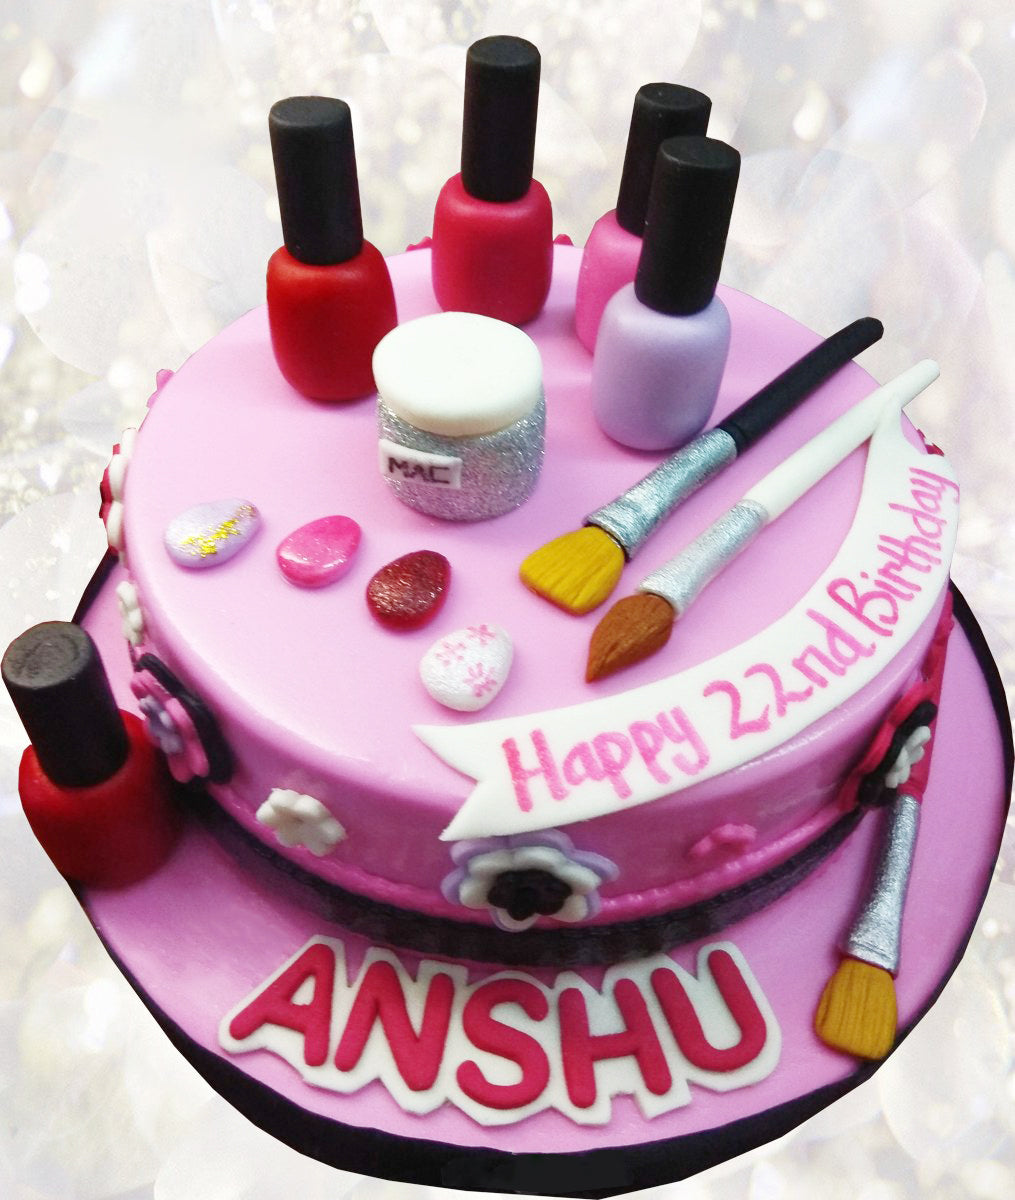 Make Up And Cosmetics Theme Cake